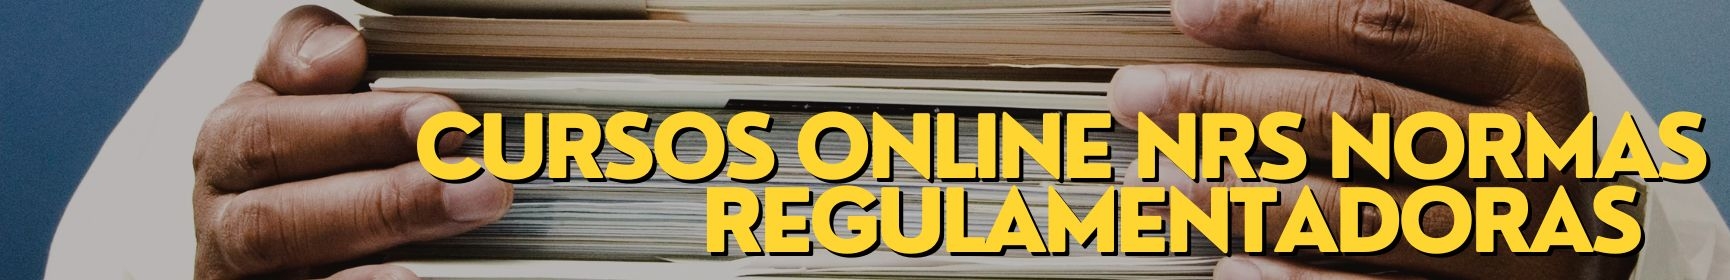 Cursos Online NRs Normas Regulamentadoras Curso a Distancia para Empresas Curso Online de Operador de Maquina